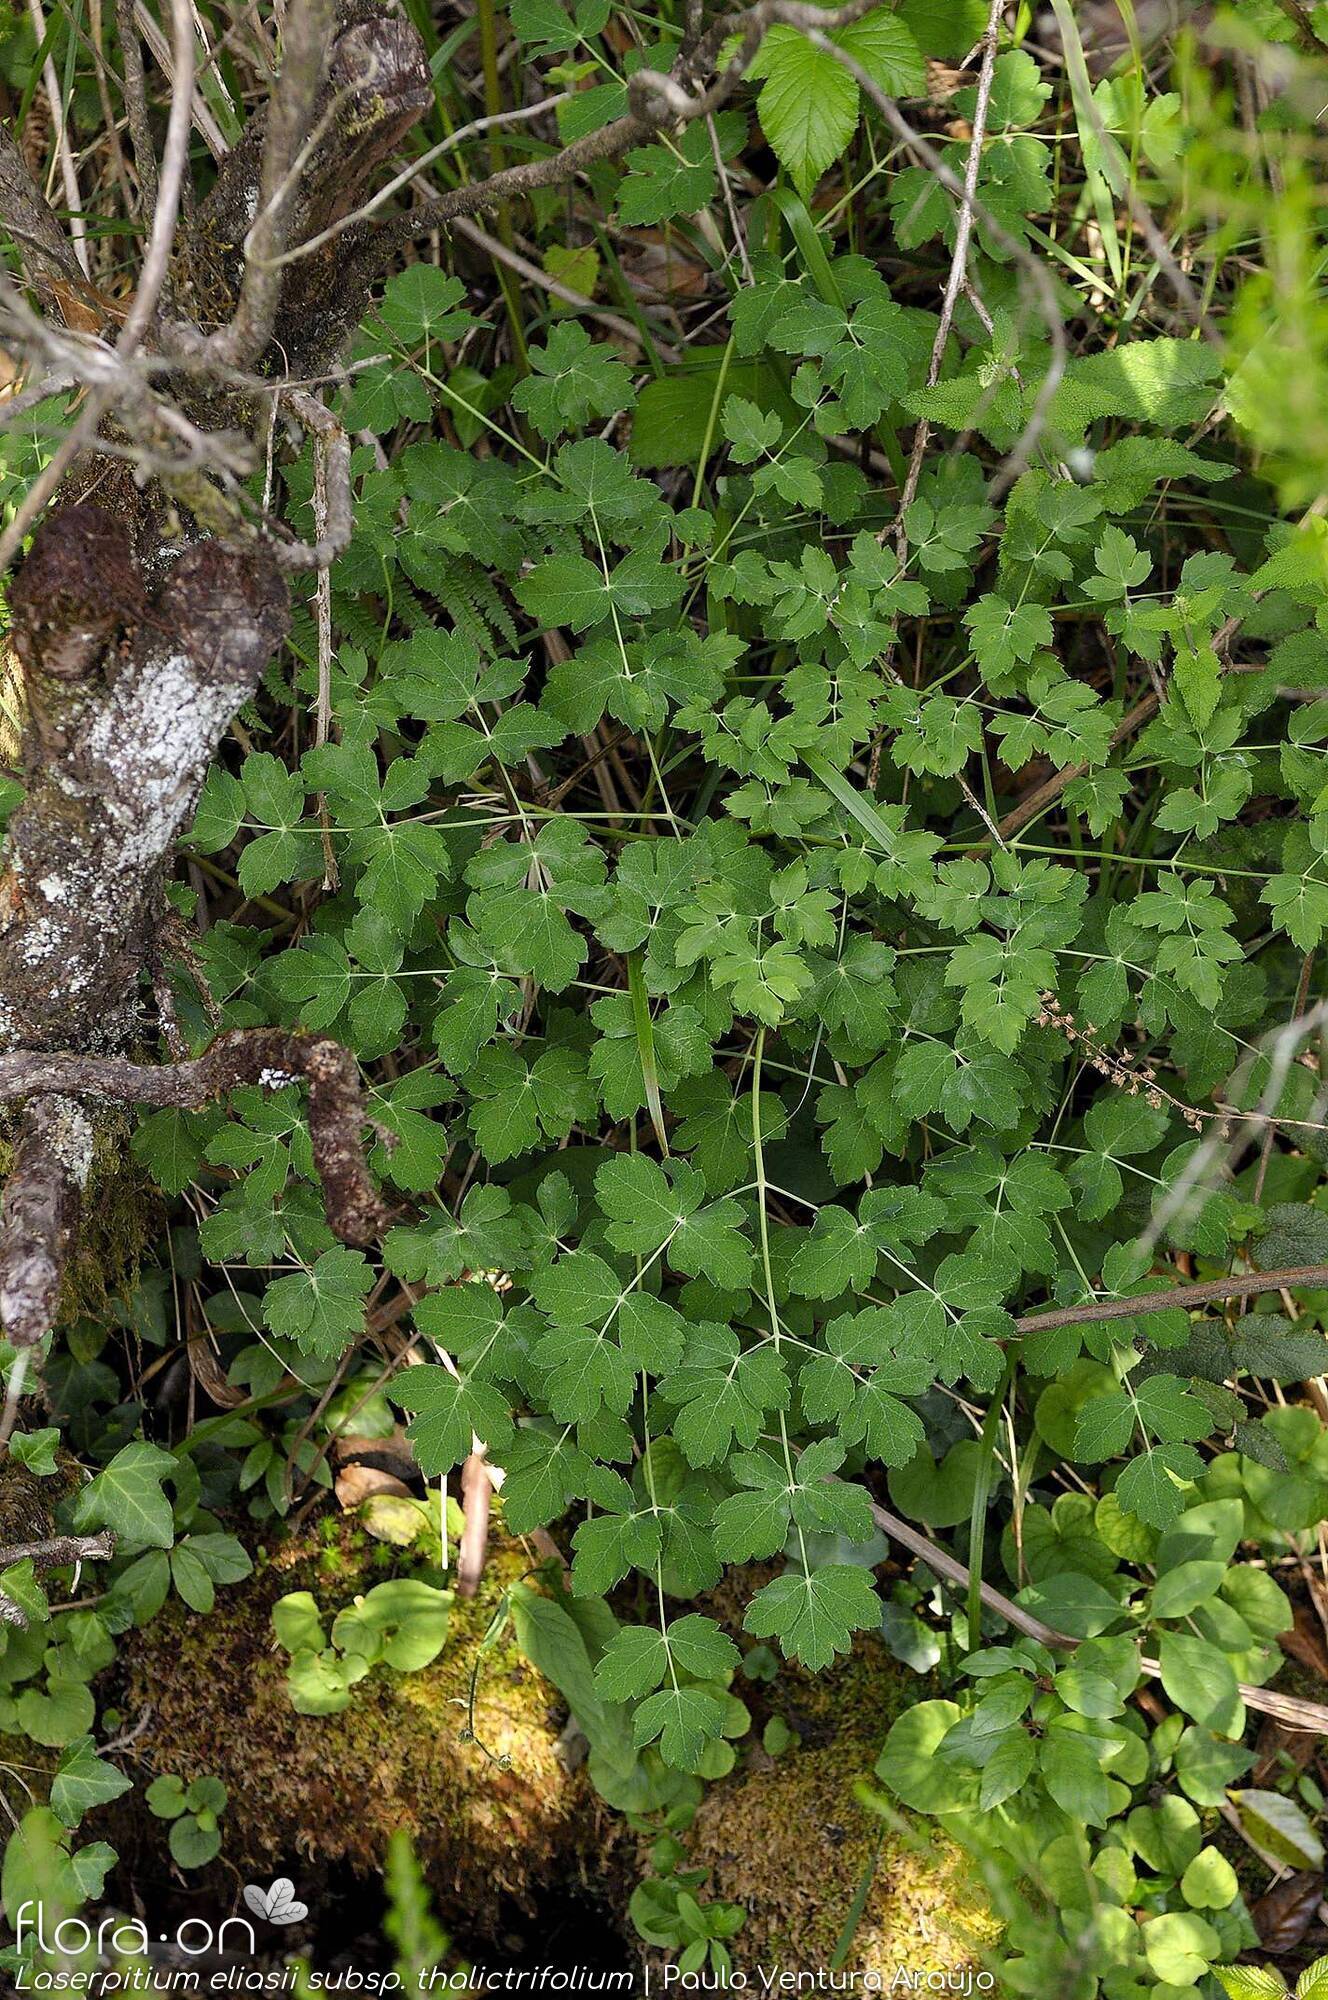 Laserpitium eliasii thalictrifolium - Folha (geral) | Paulo Ventura Araújo; CC BY-NC 4.0